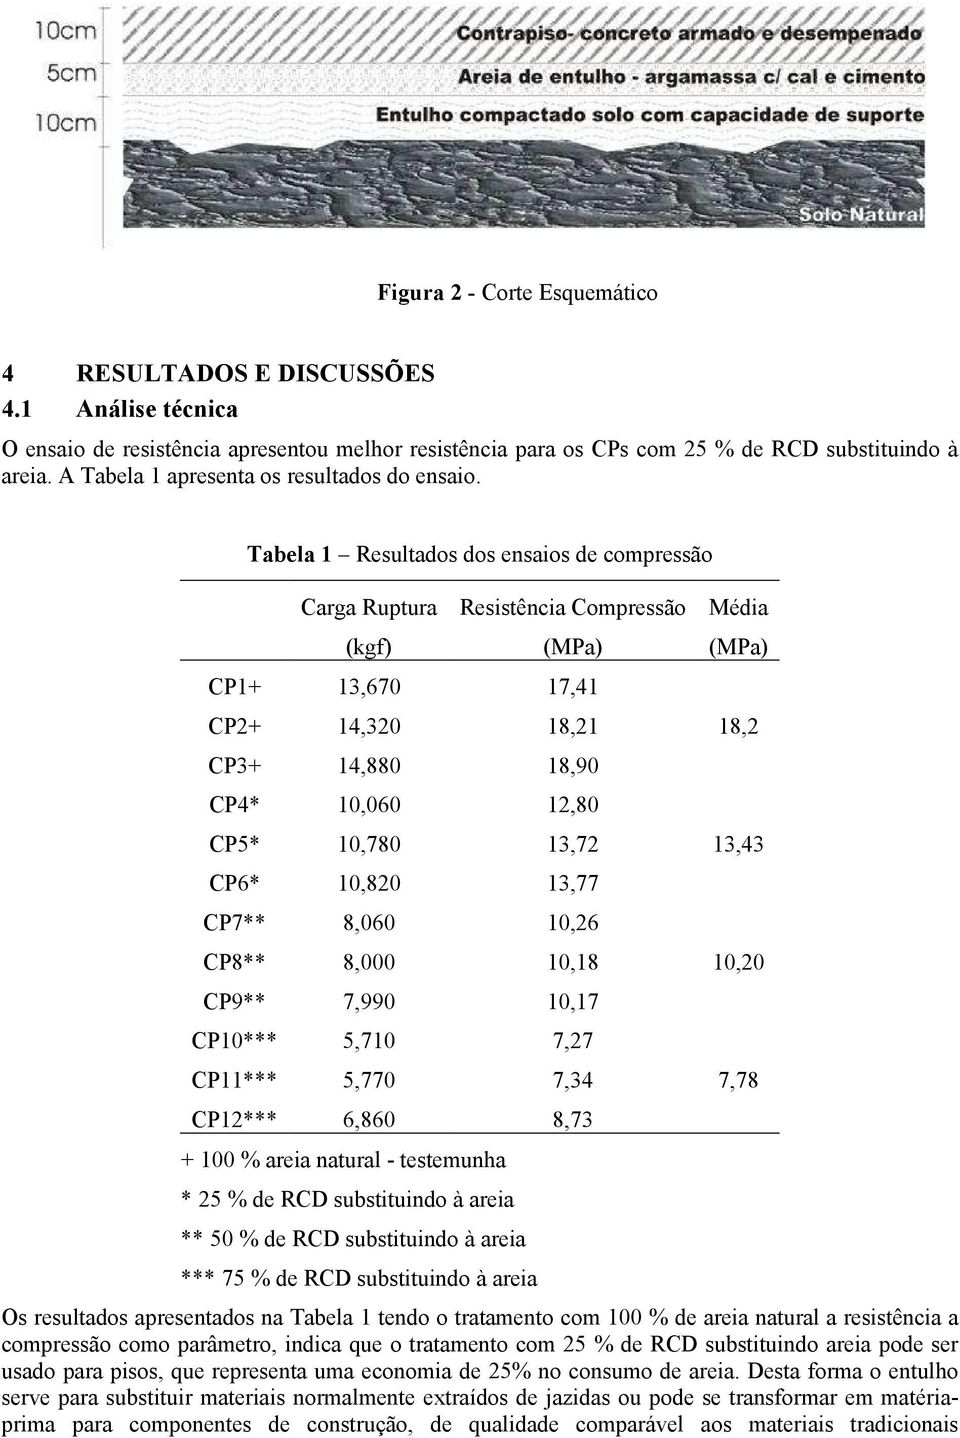 Tabela 1 Resultados dos ensaios de compressão Carga Ruptura (kgf) Resistência Compressão (MPa) CP1+ 13,670 17,41 CP2+ 14,320 18,21 CP3+ 14,880 18,90 CP4* 10,060 12,80 CP5* 10,780 13,72 CP6* 10,820